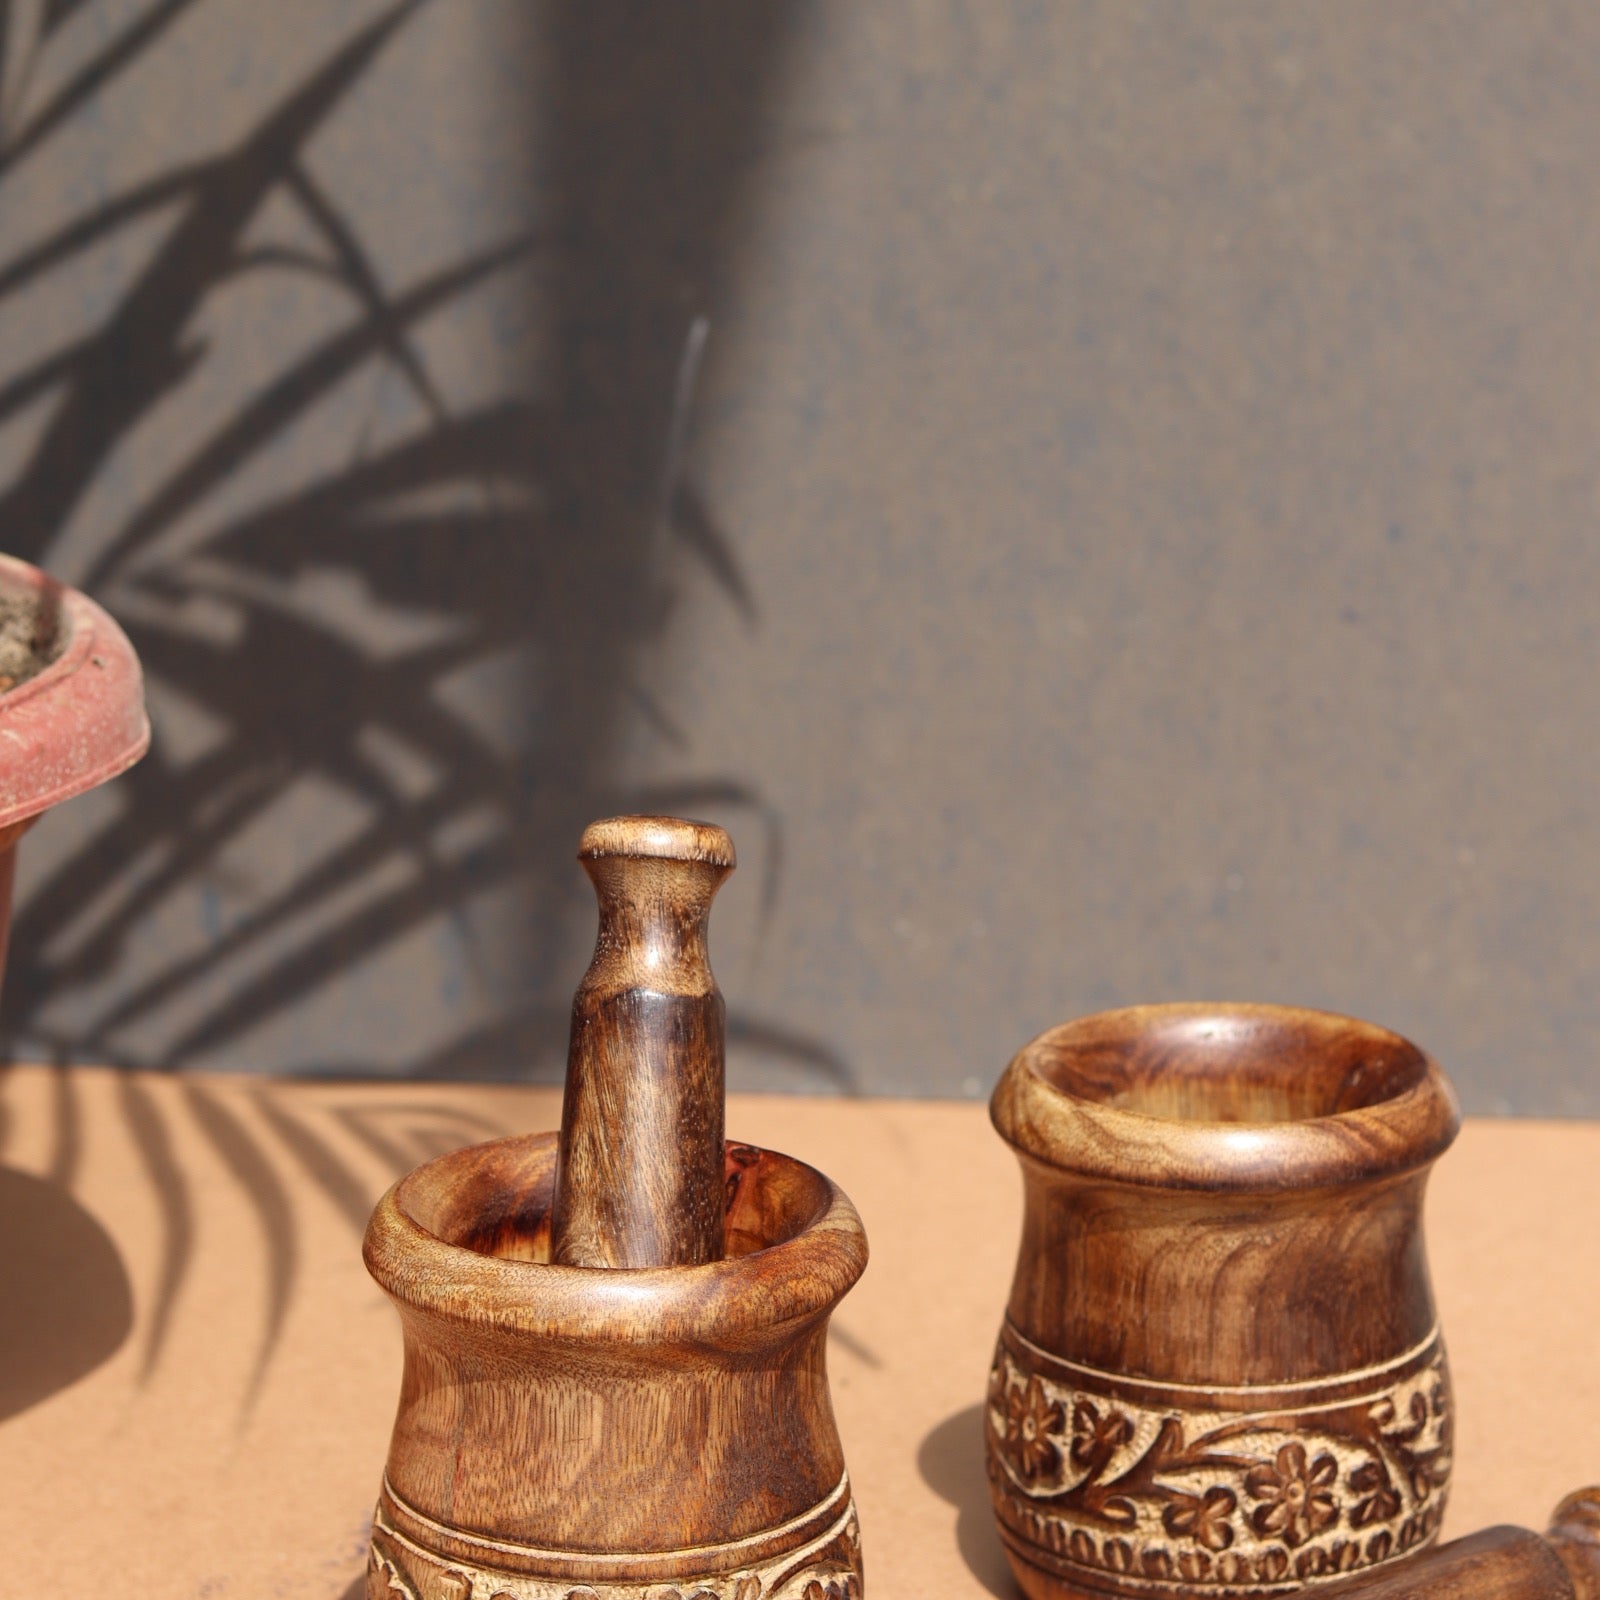 Handmade wooden mortar & pestle